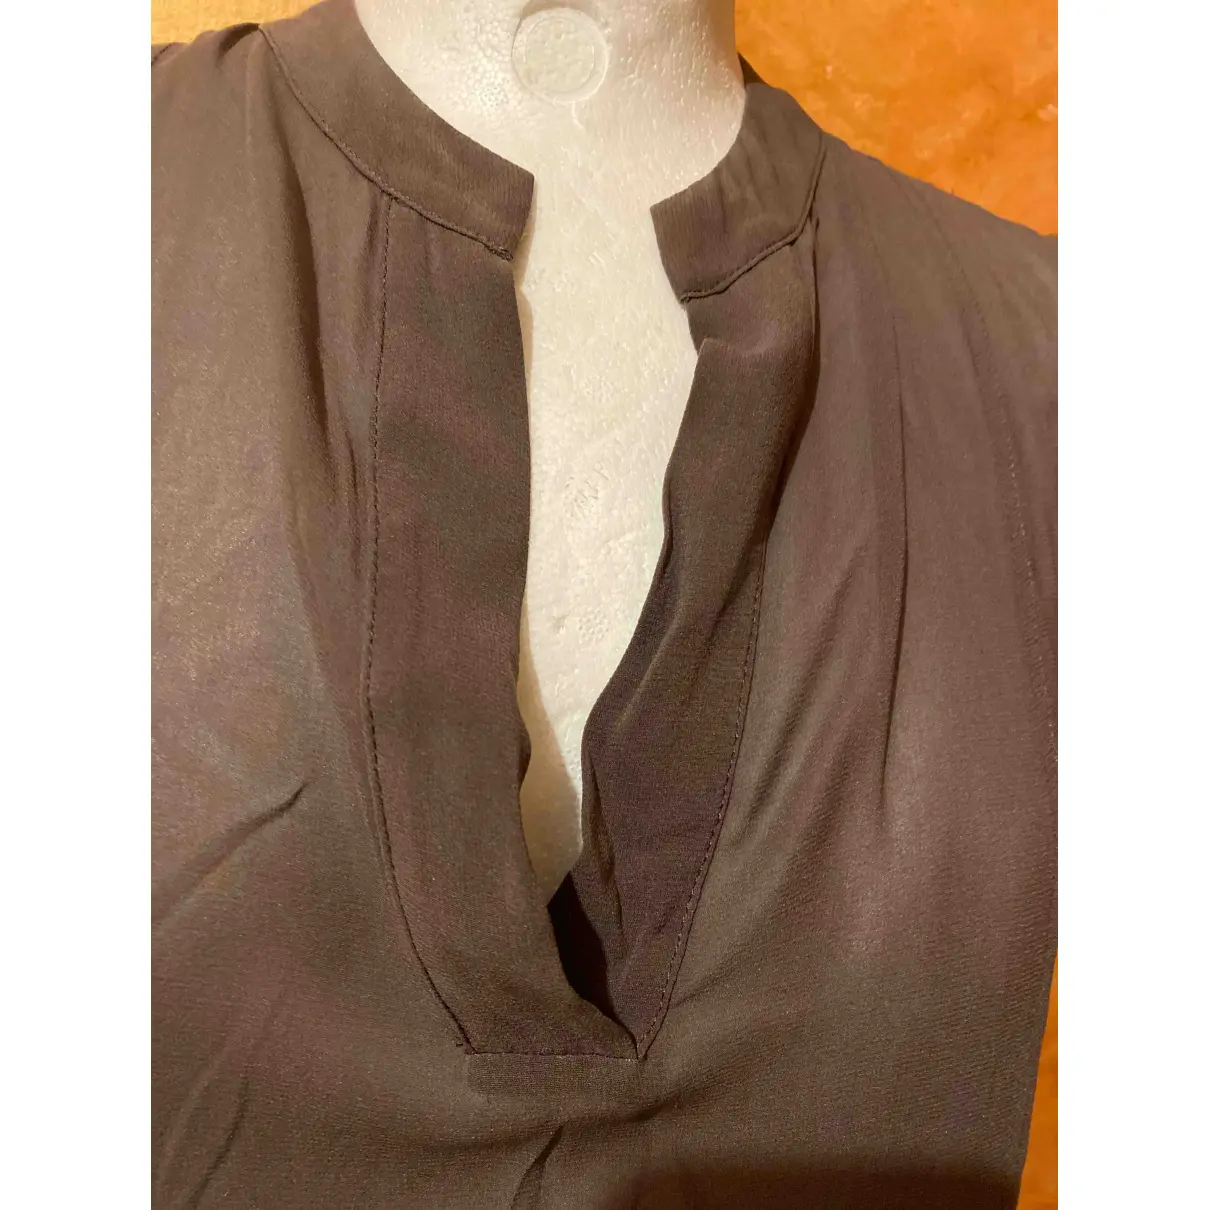 Buy Barneys New York Silk blouse online